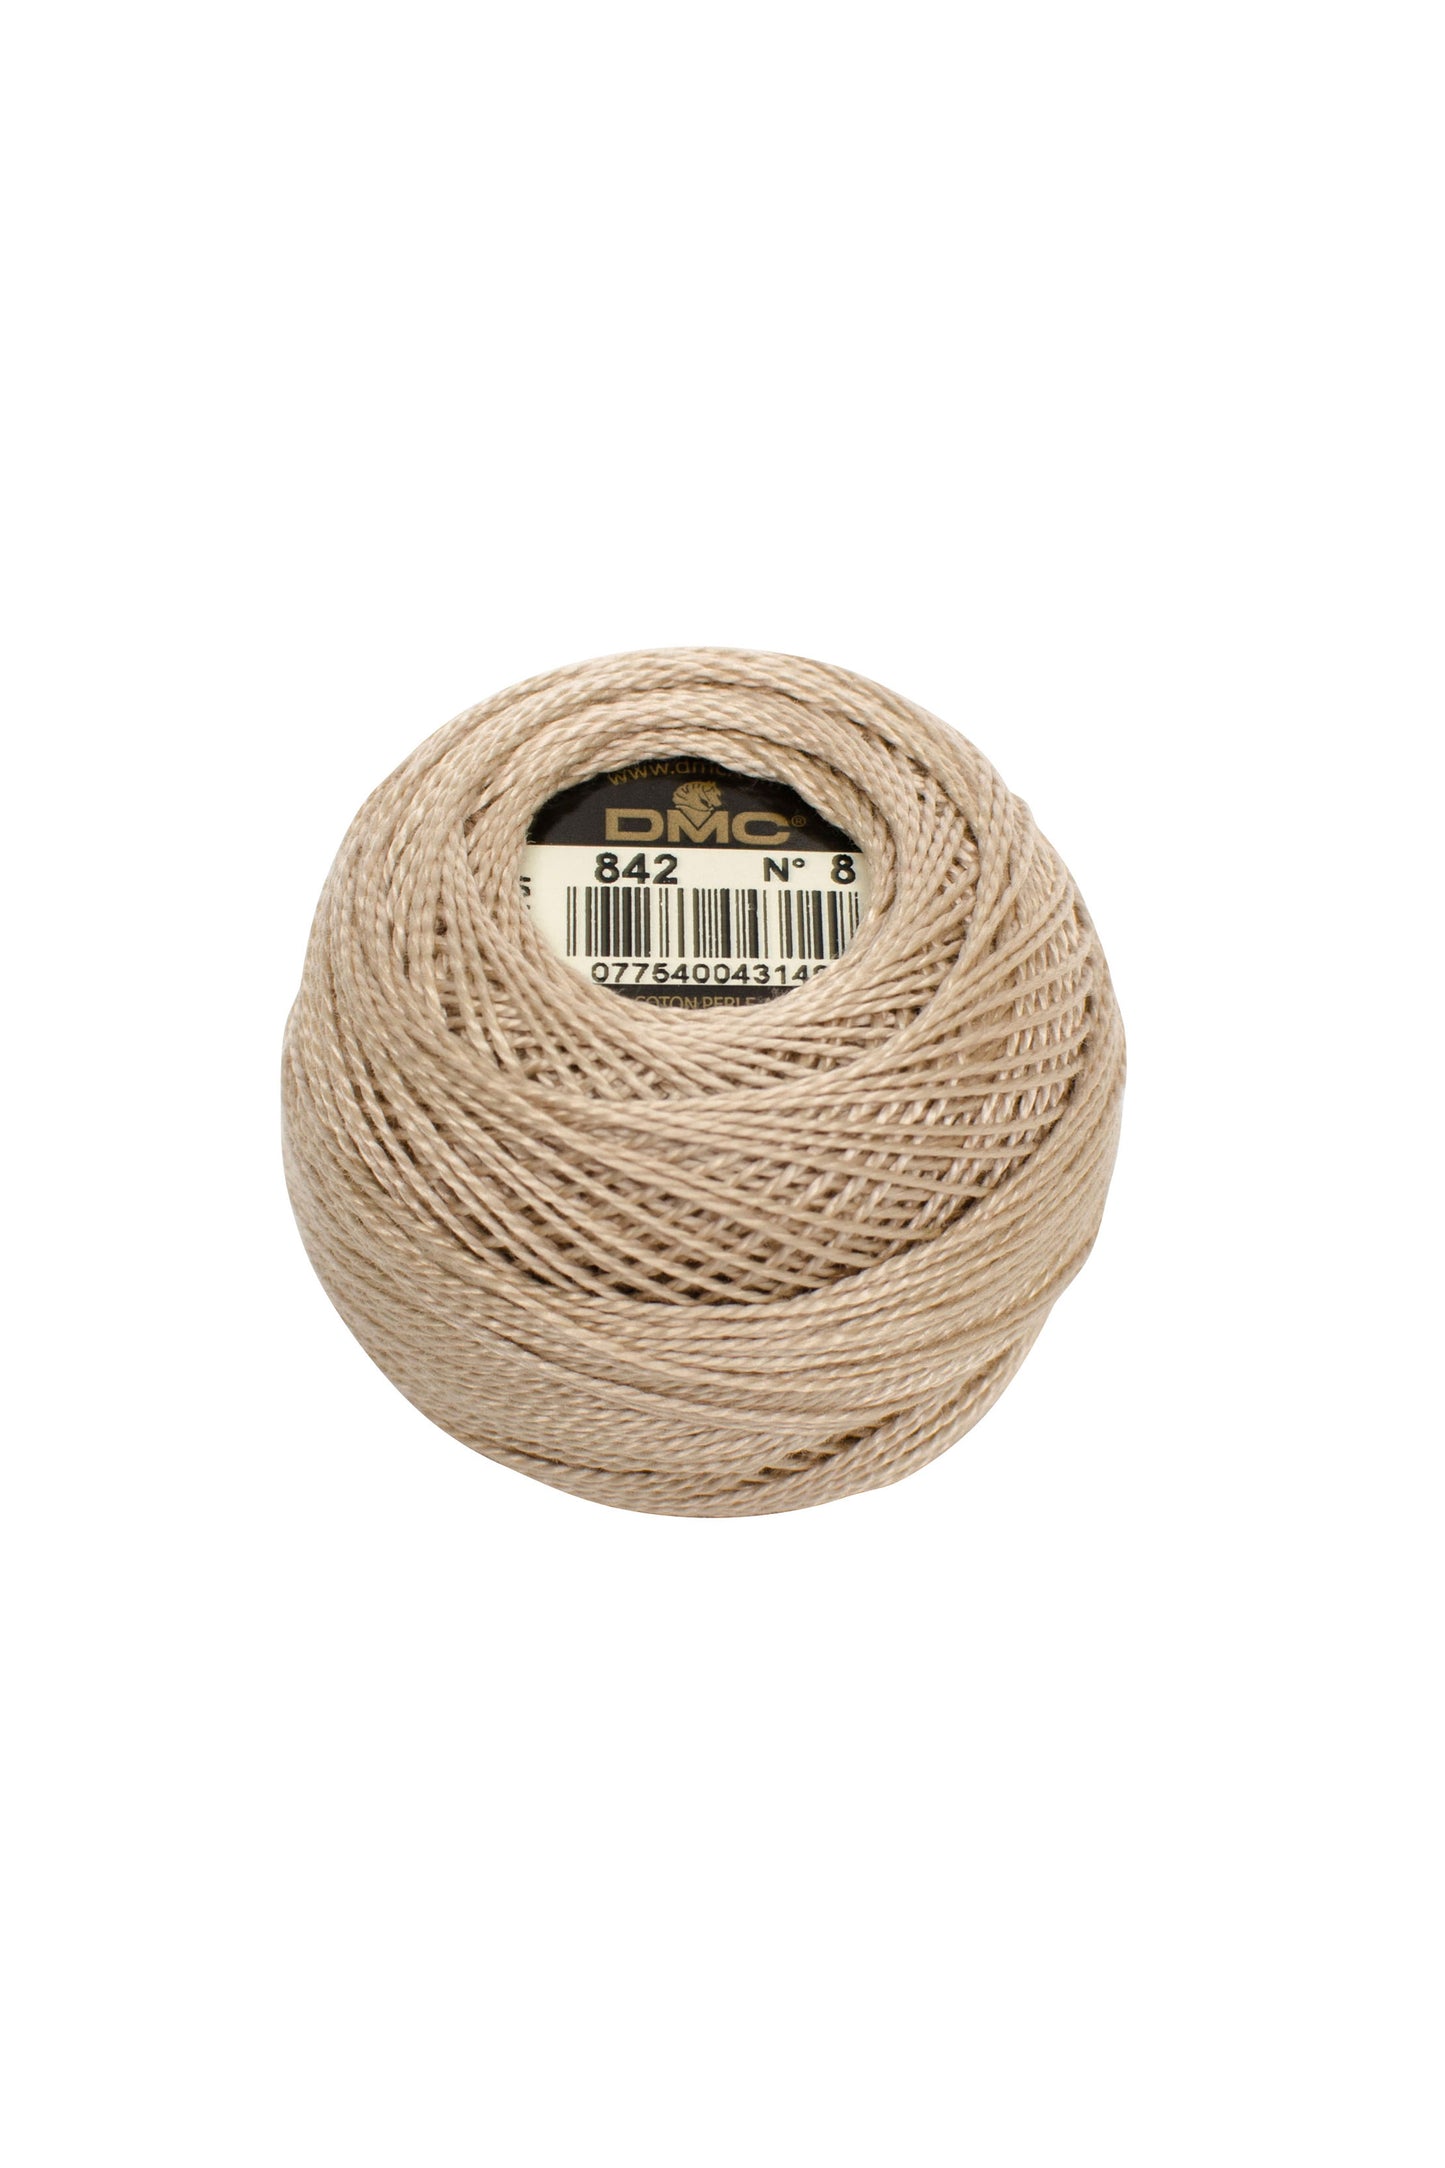 842 Very Light Beige – DMC #12 Perle Cotton